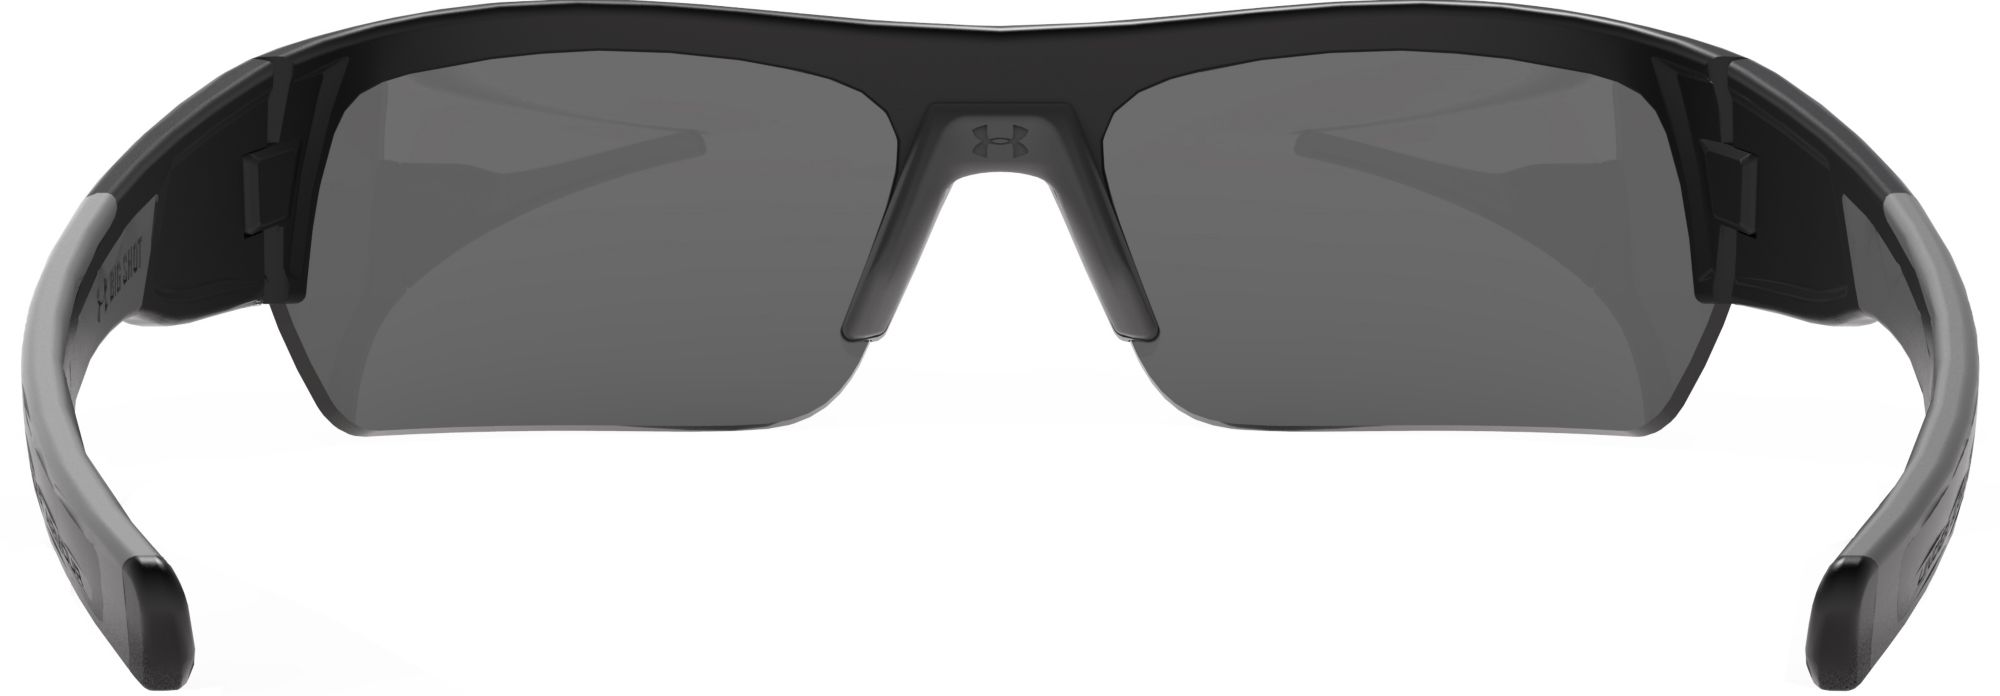 storm polarized sunglasses